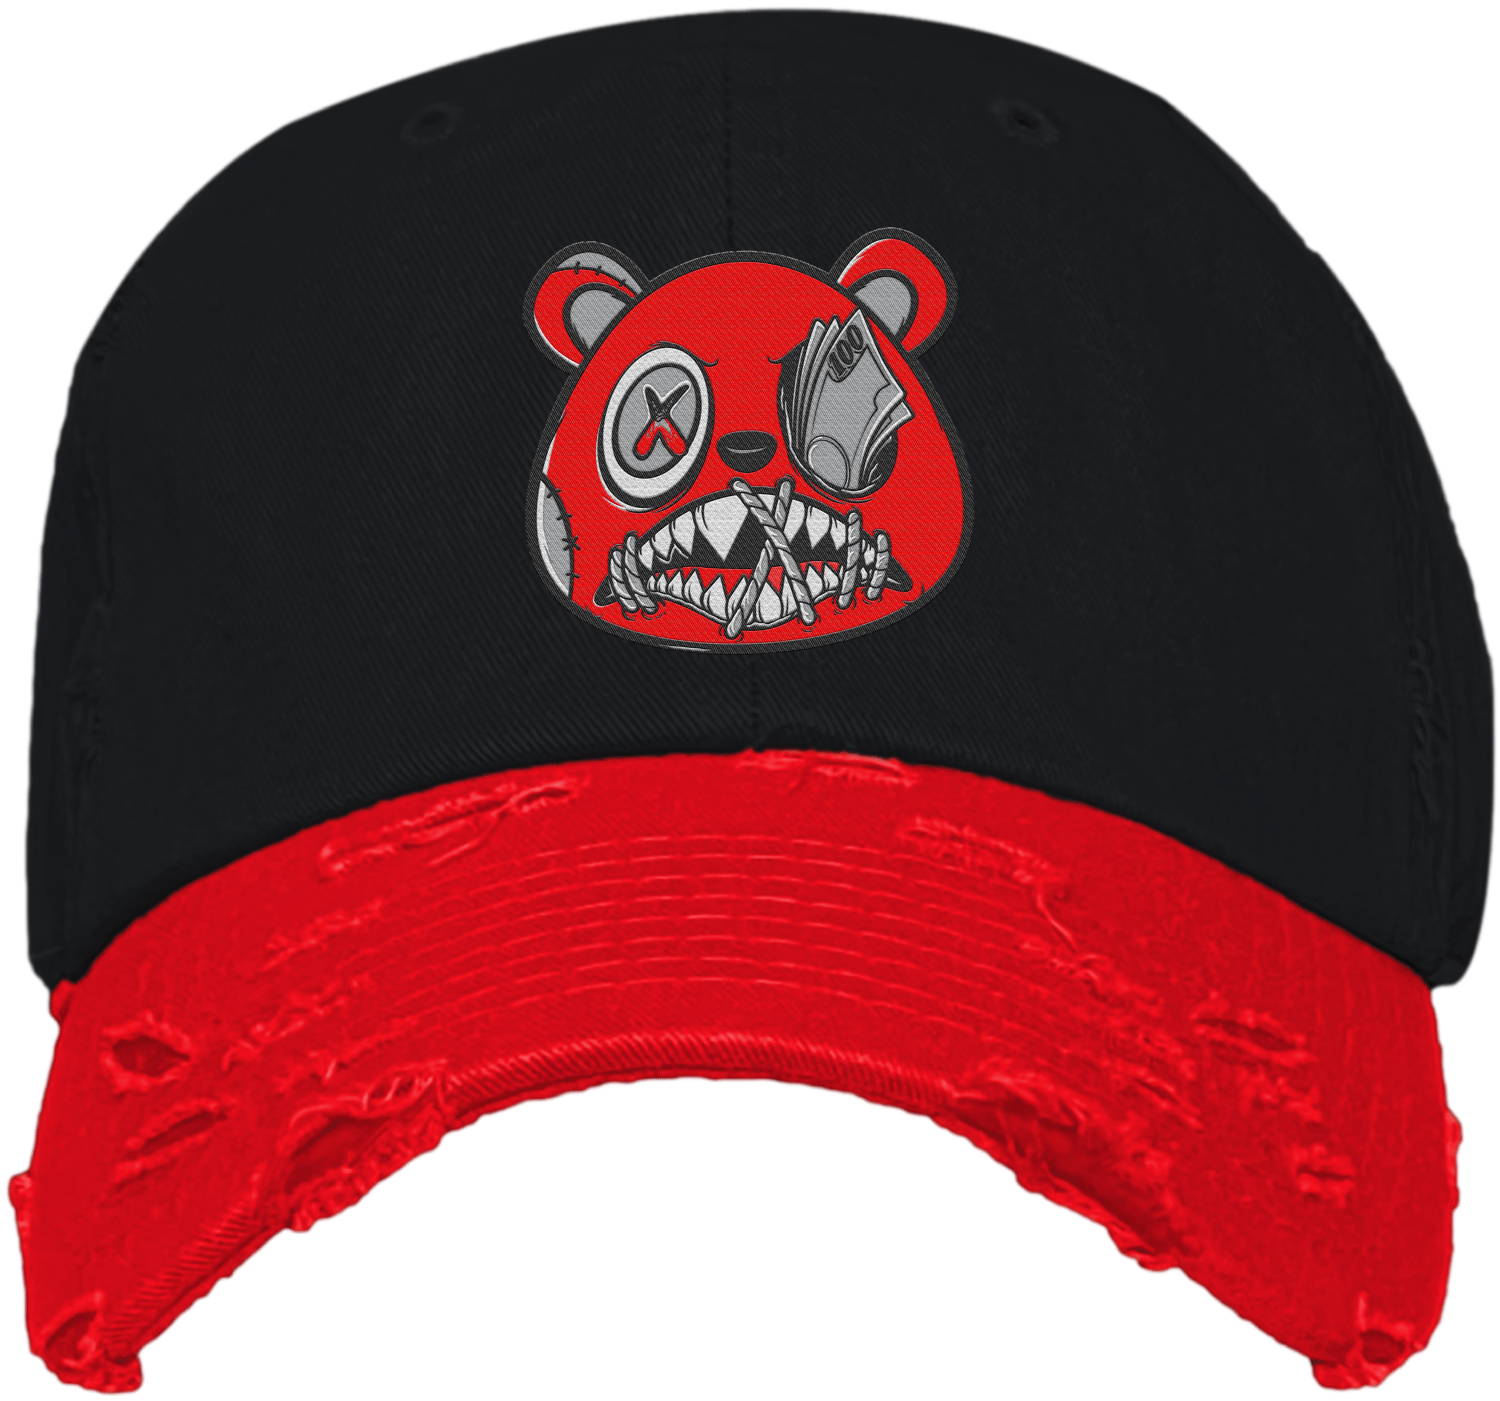 Bred 4s Dad Hat - Jordan 4 Bred Reimagined Hats - Red Money Talks